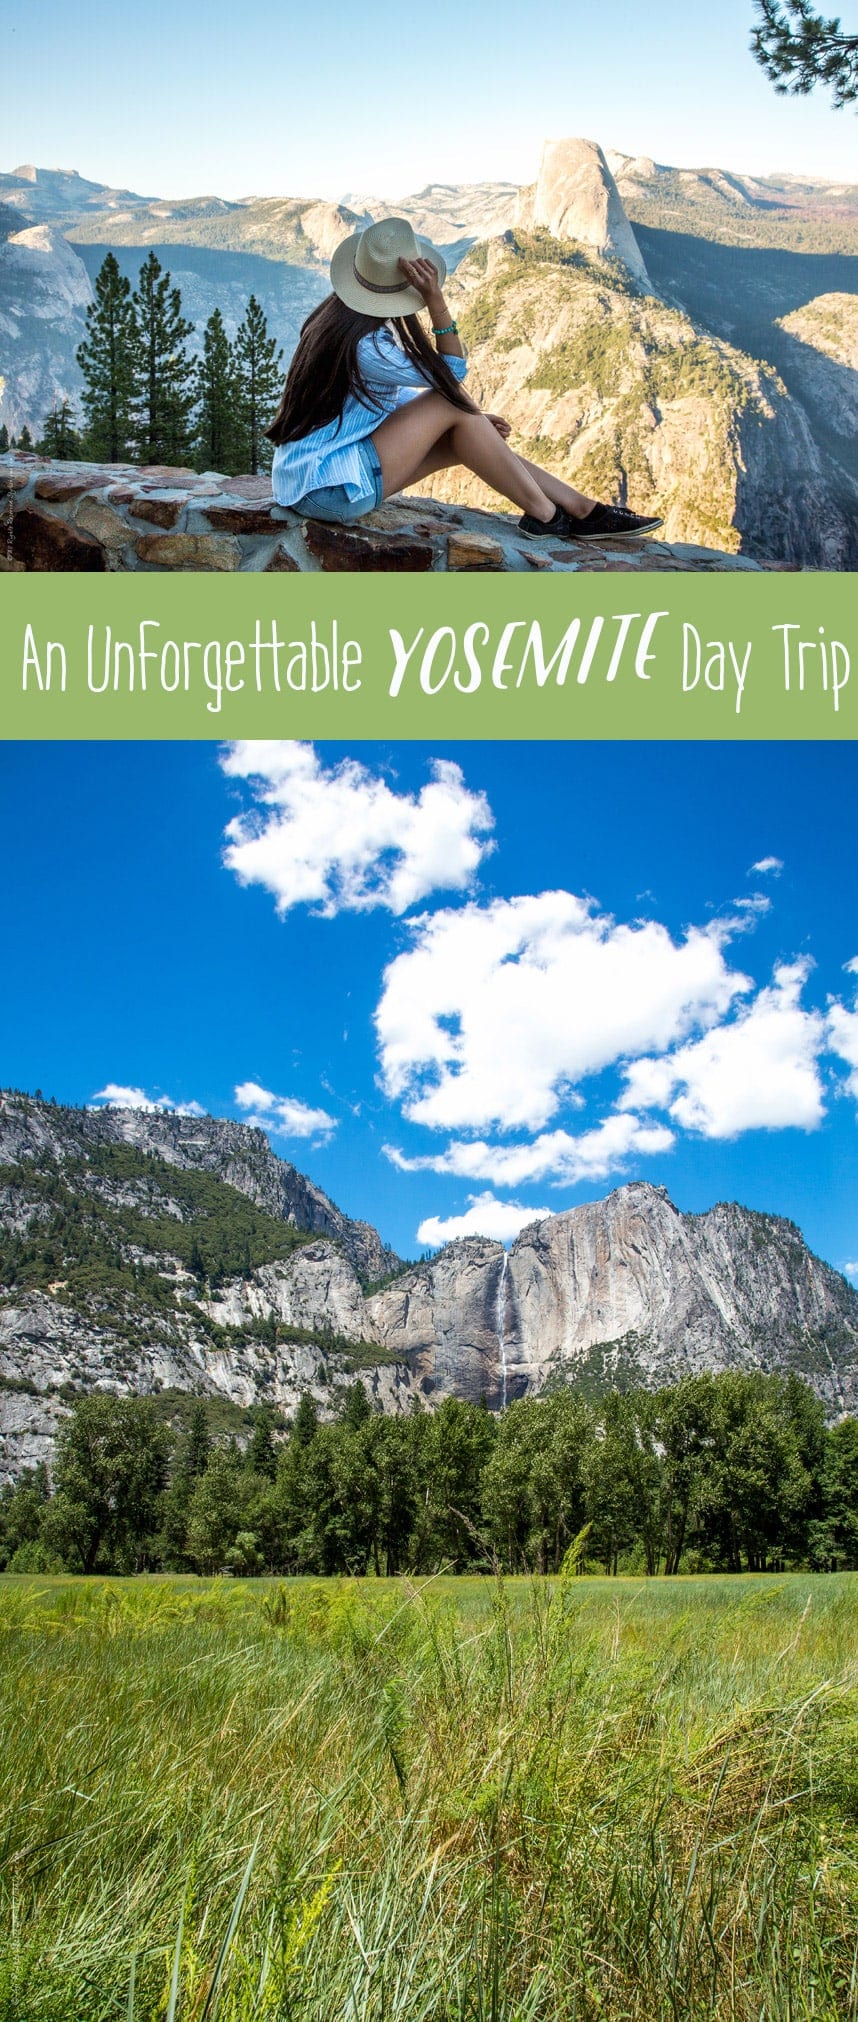 An Unforgettable Yosemite Day Trip - Visit Stylishlyme.com to view the Unforgettable Yosemite Day Trip Guide 